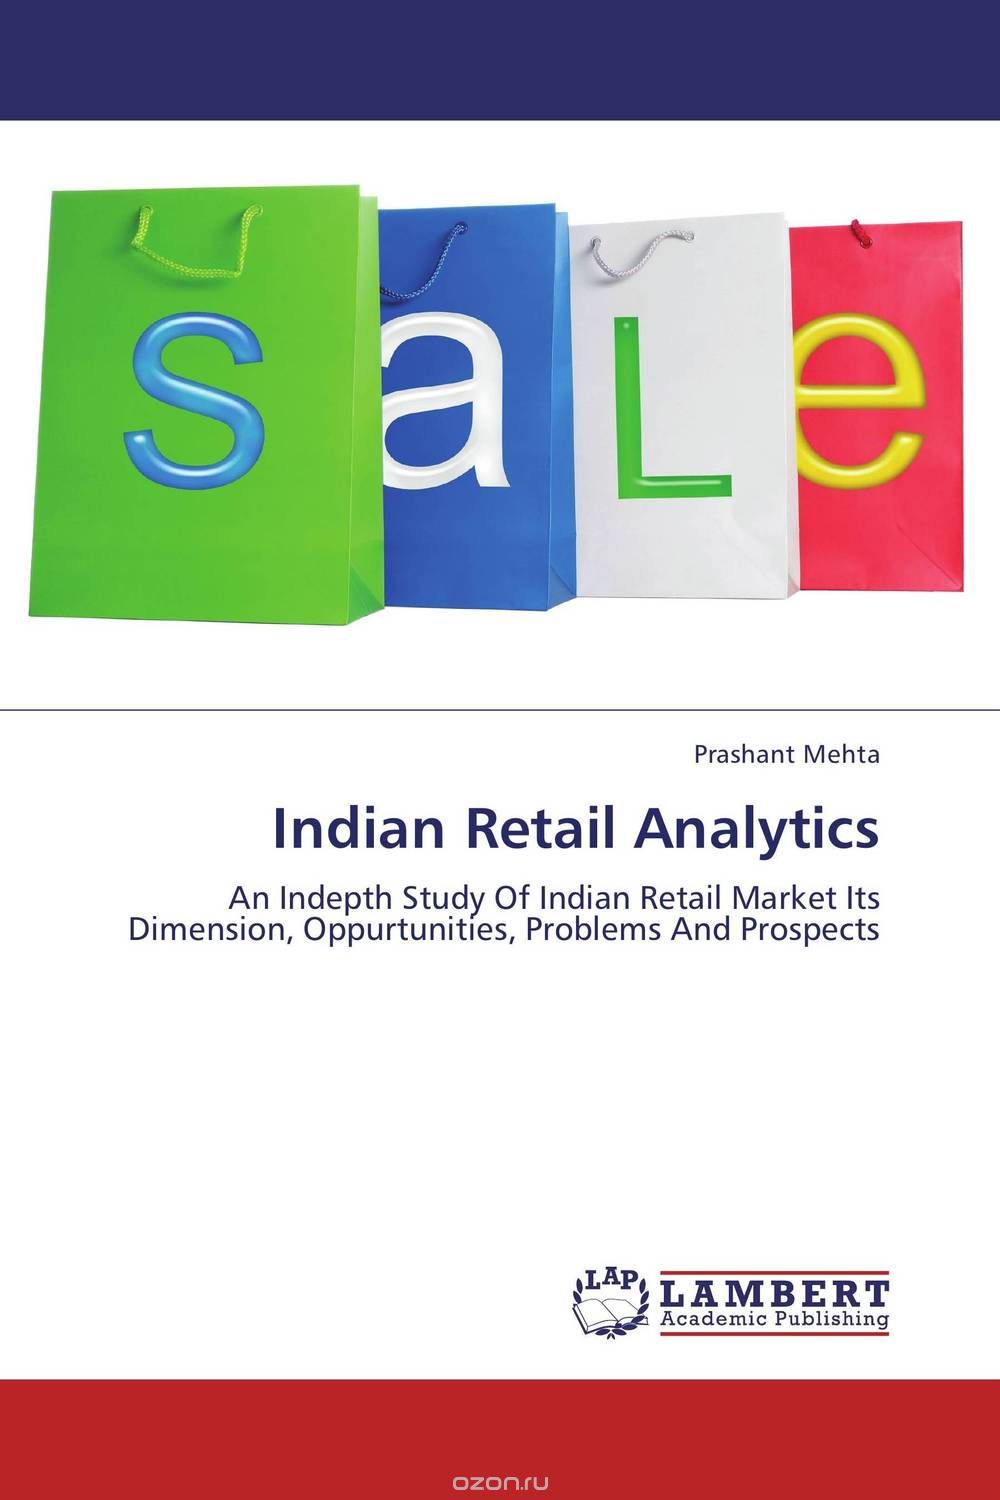 Скачать книгу "Indian Retail Analytics"